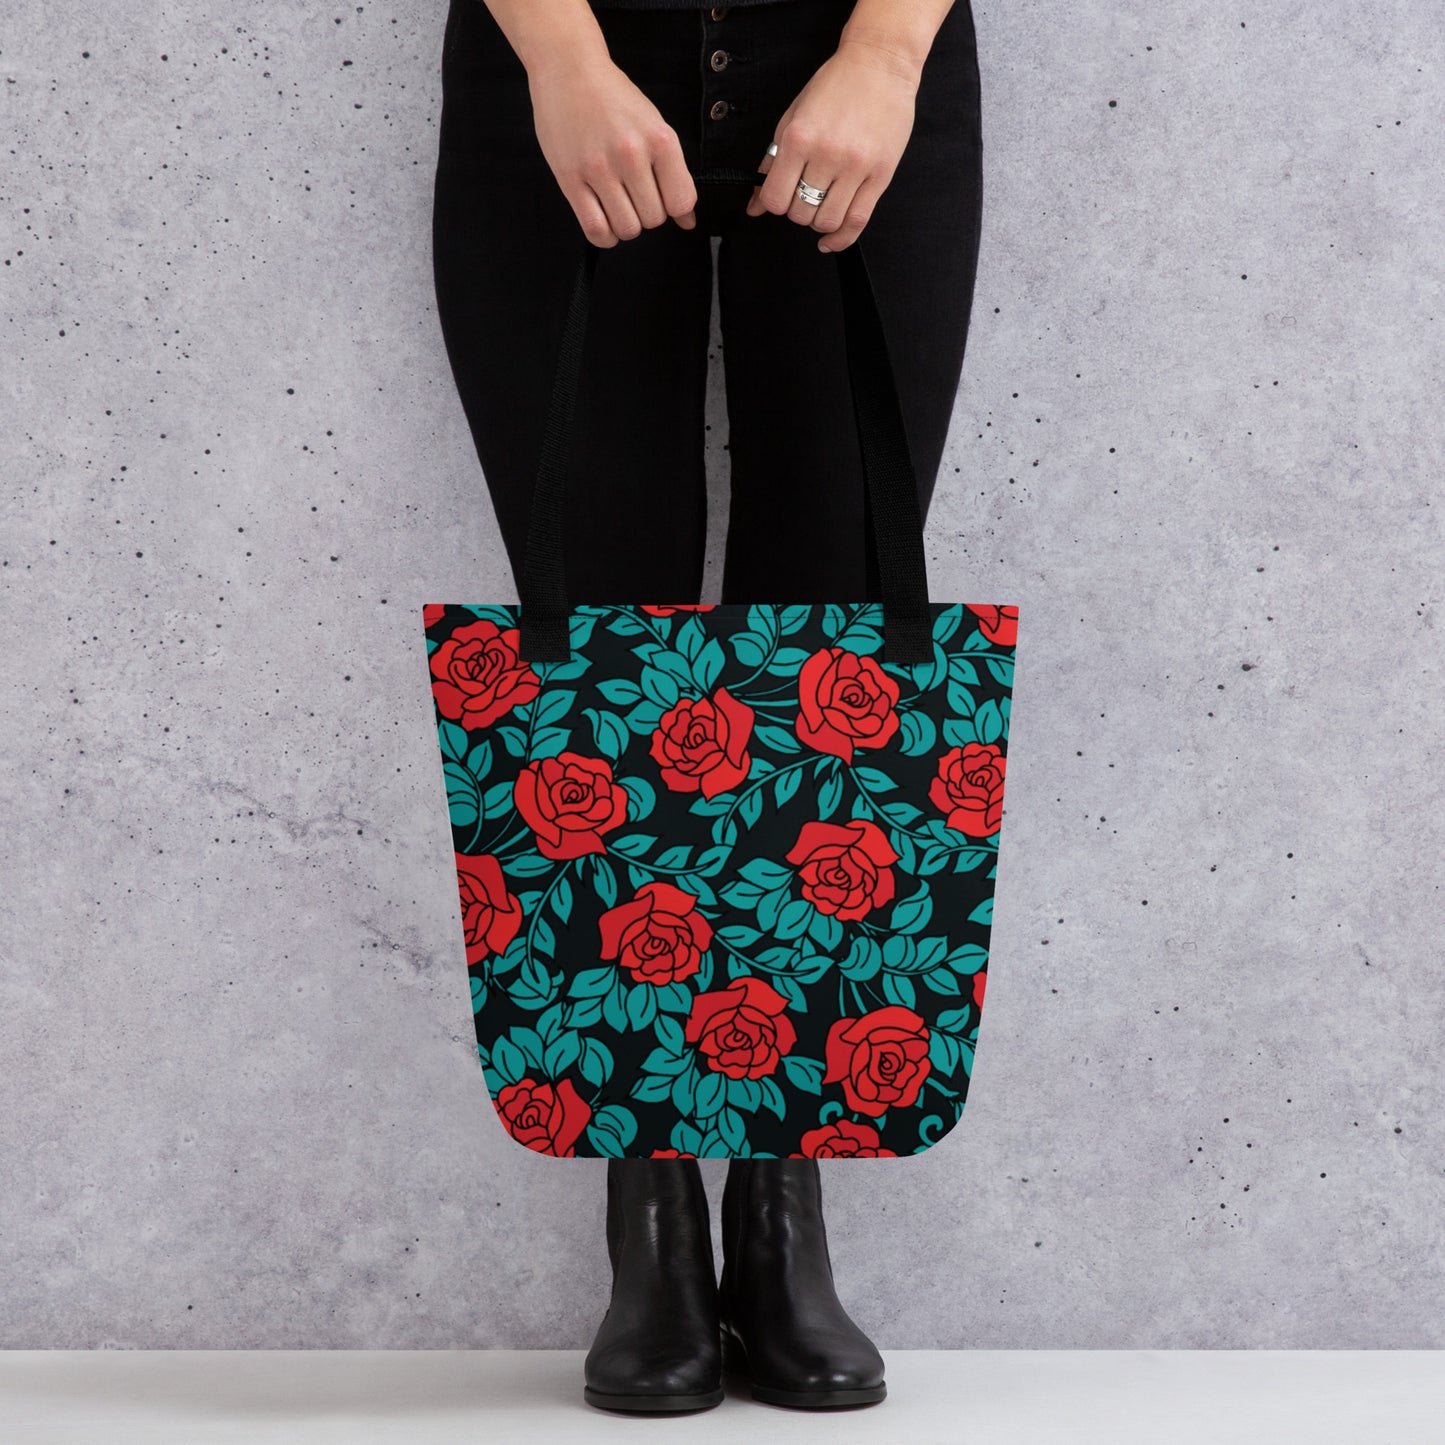 Premium Polyester Tote Bag - Rose Flower Print